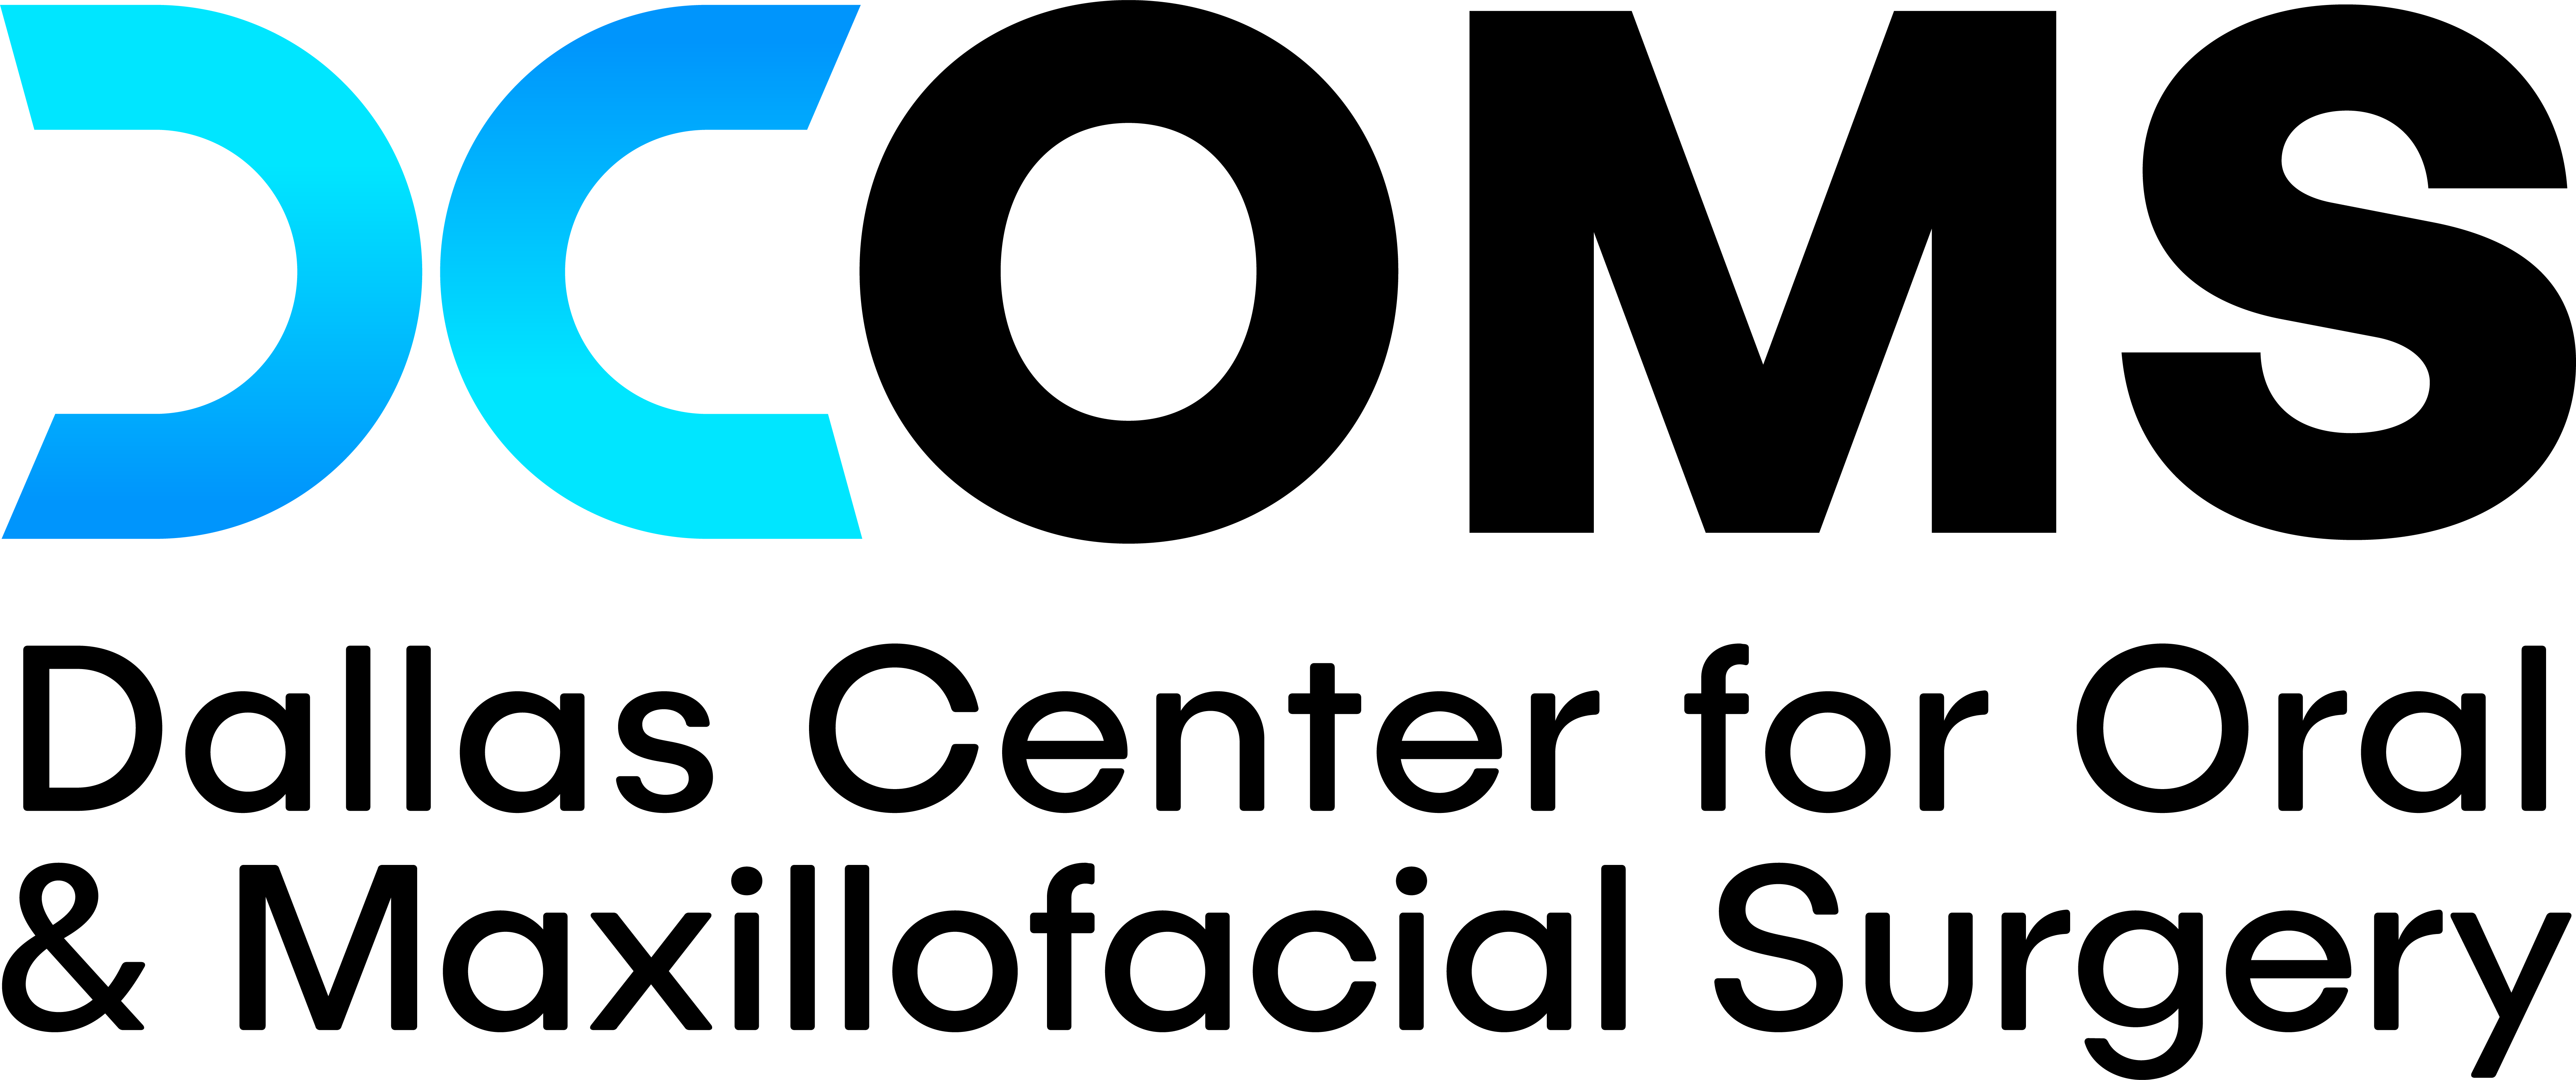 Primary Logo | Full Color on Black